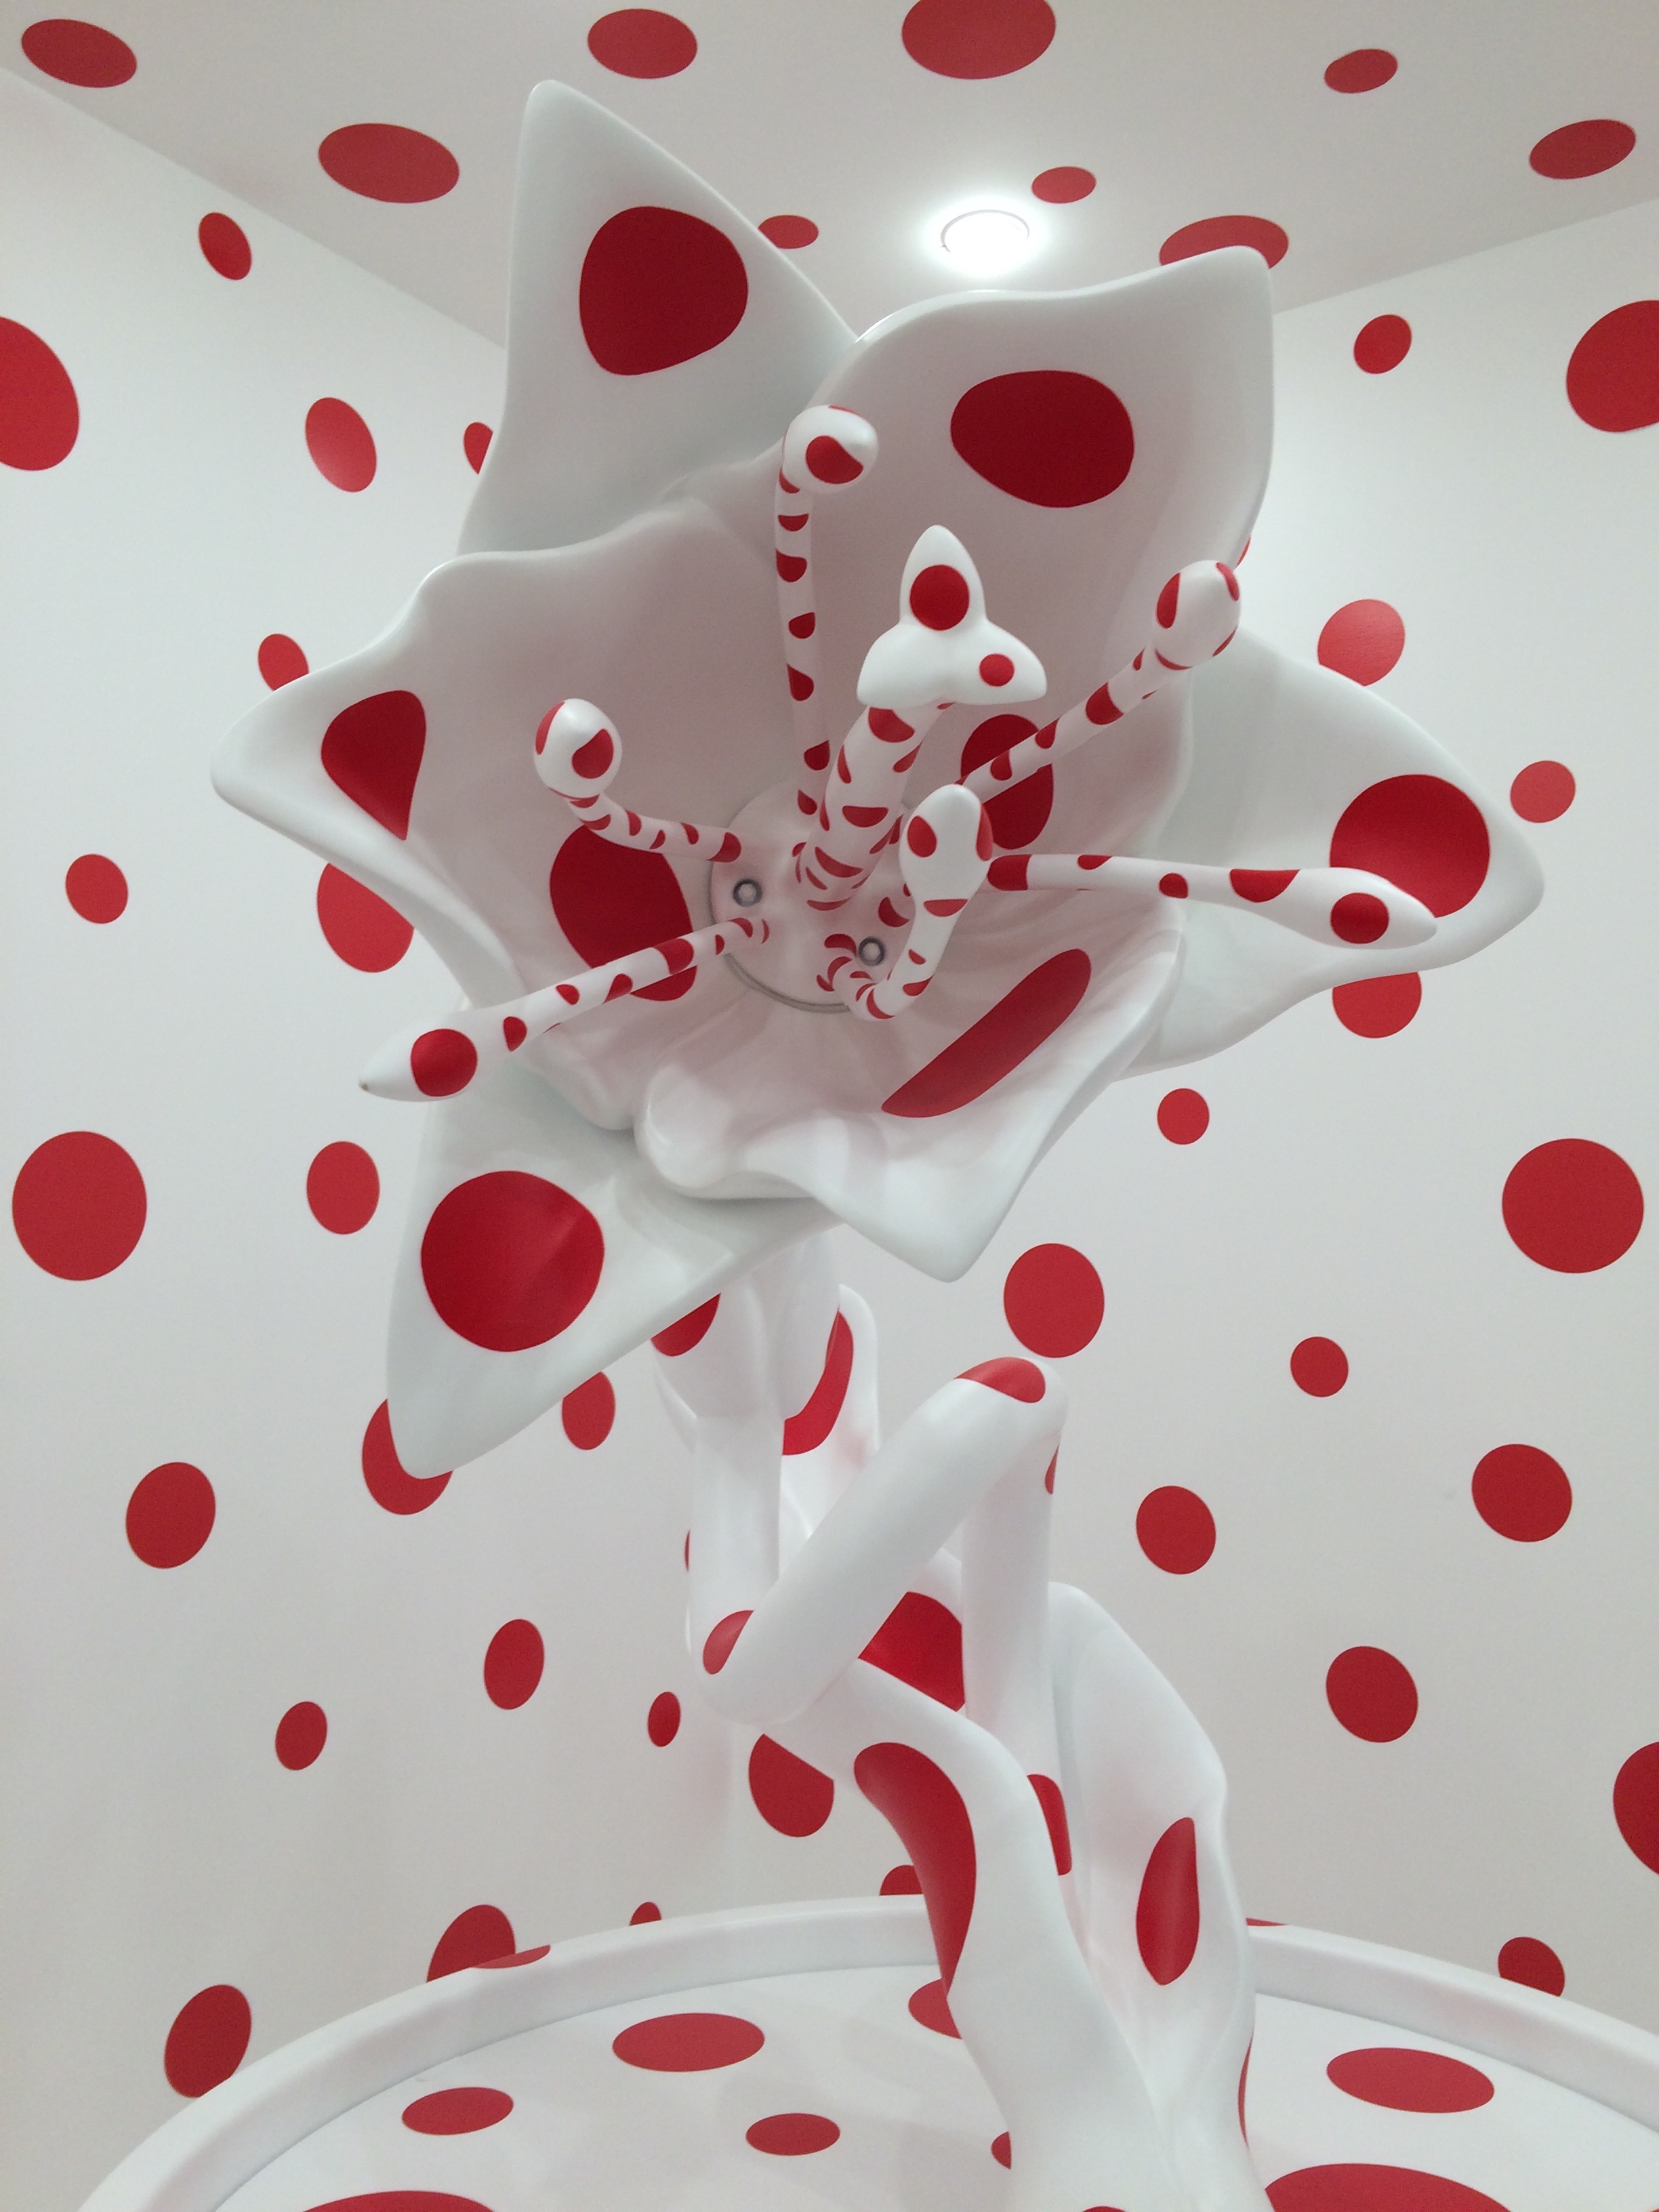 (Installation, Yayoi Kusama, Red Dot Room, David Zwirner Gallery)